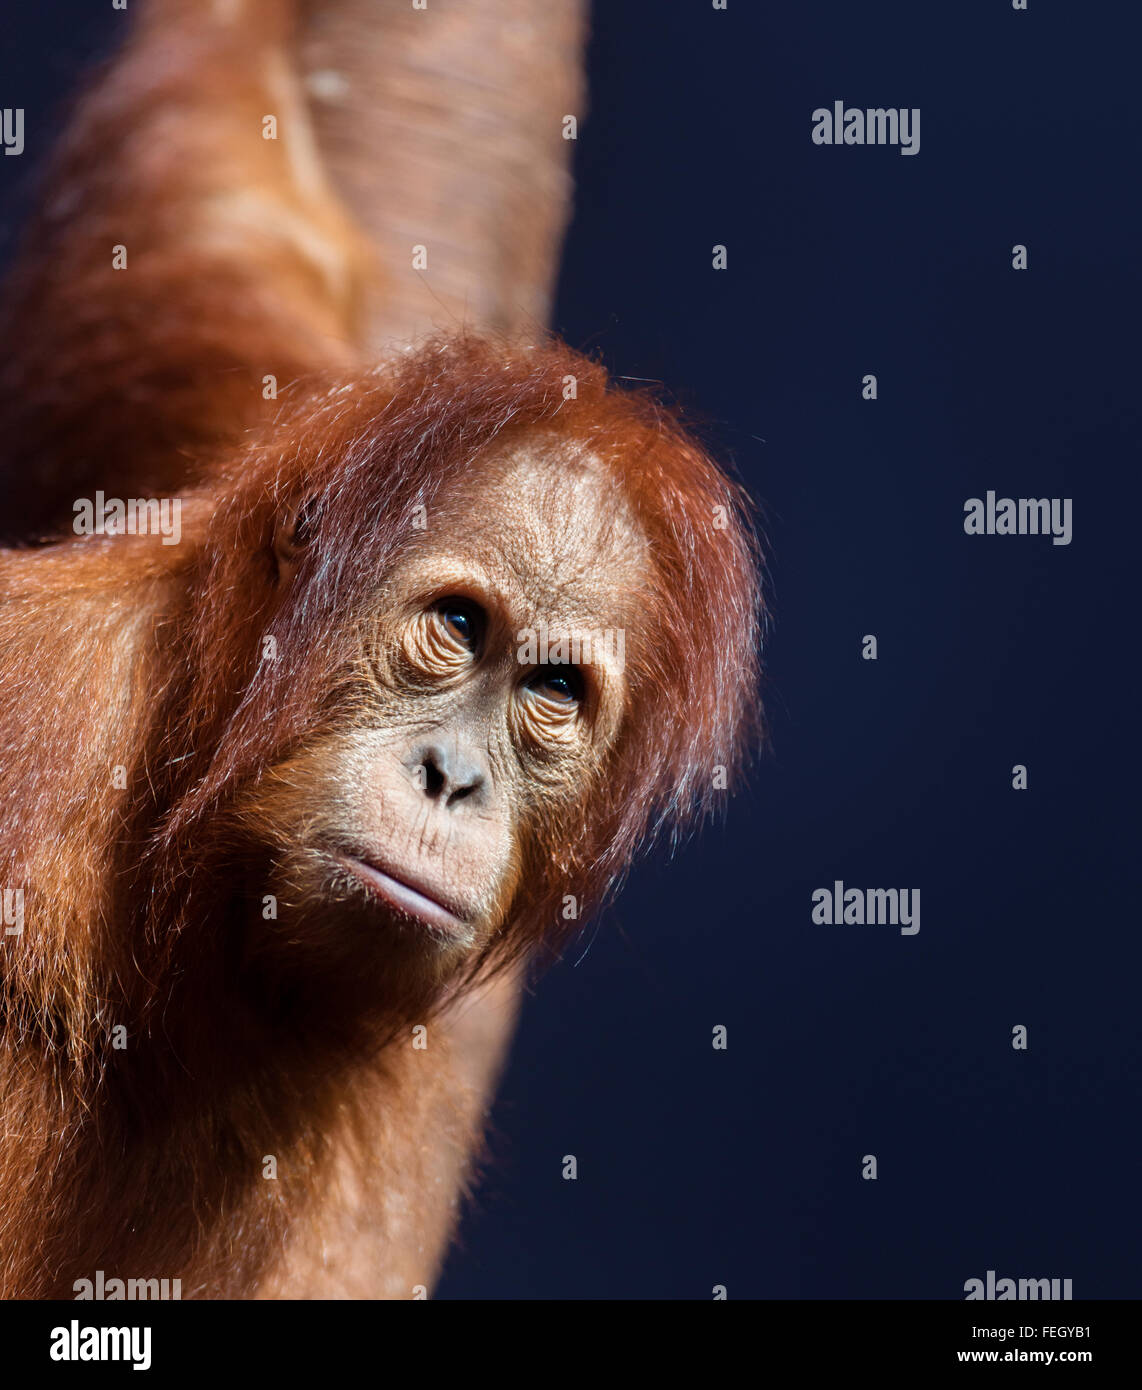 Animals: young orangutan, portrait on dark blue background Stock Photo